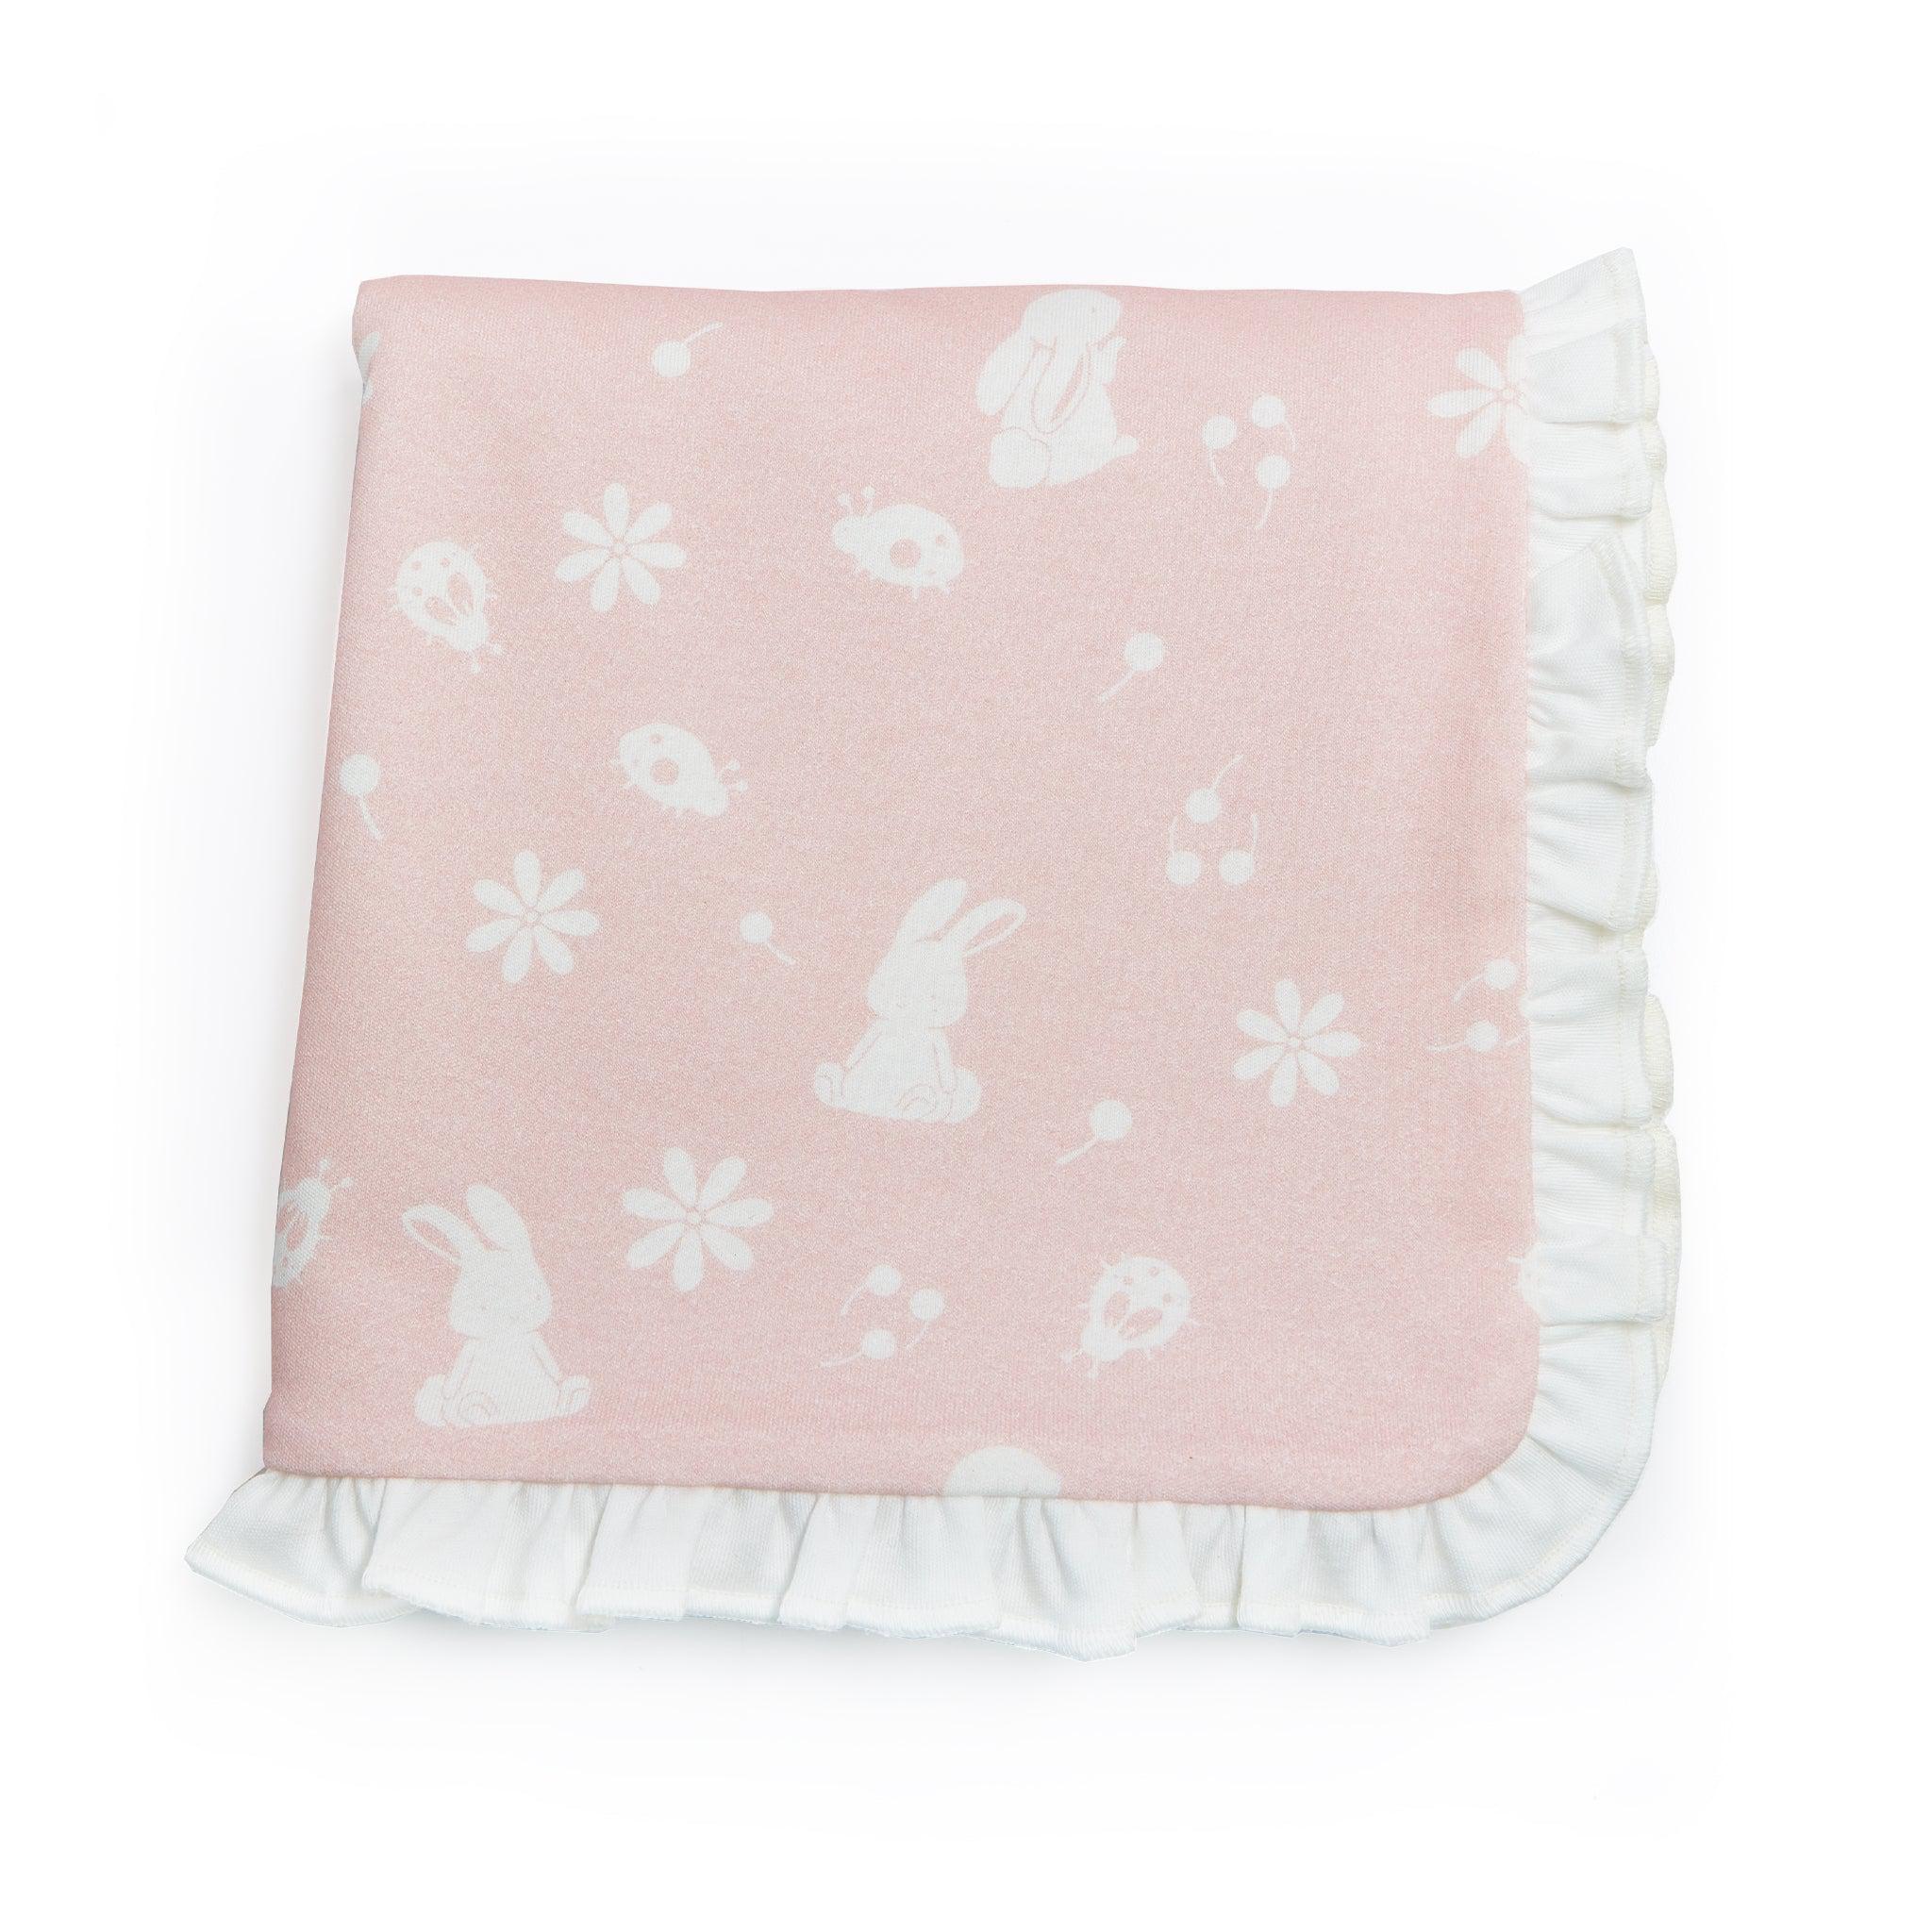 Blossom's Organic Receiving Blanket